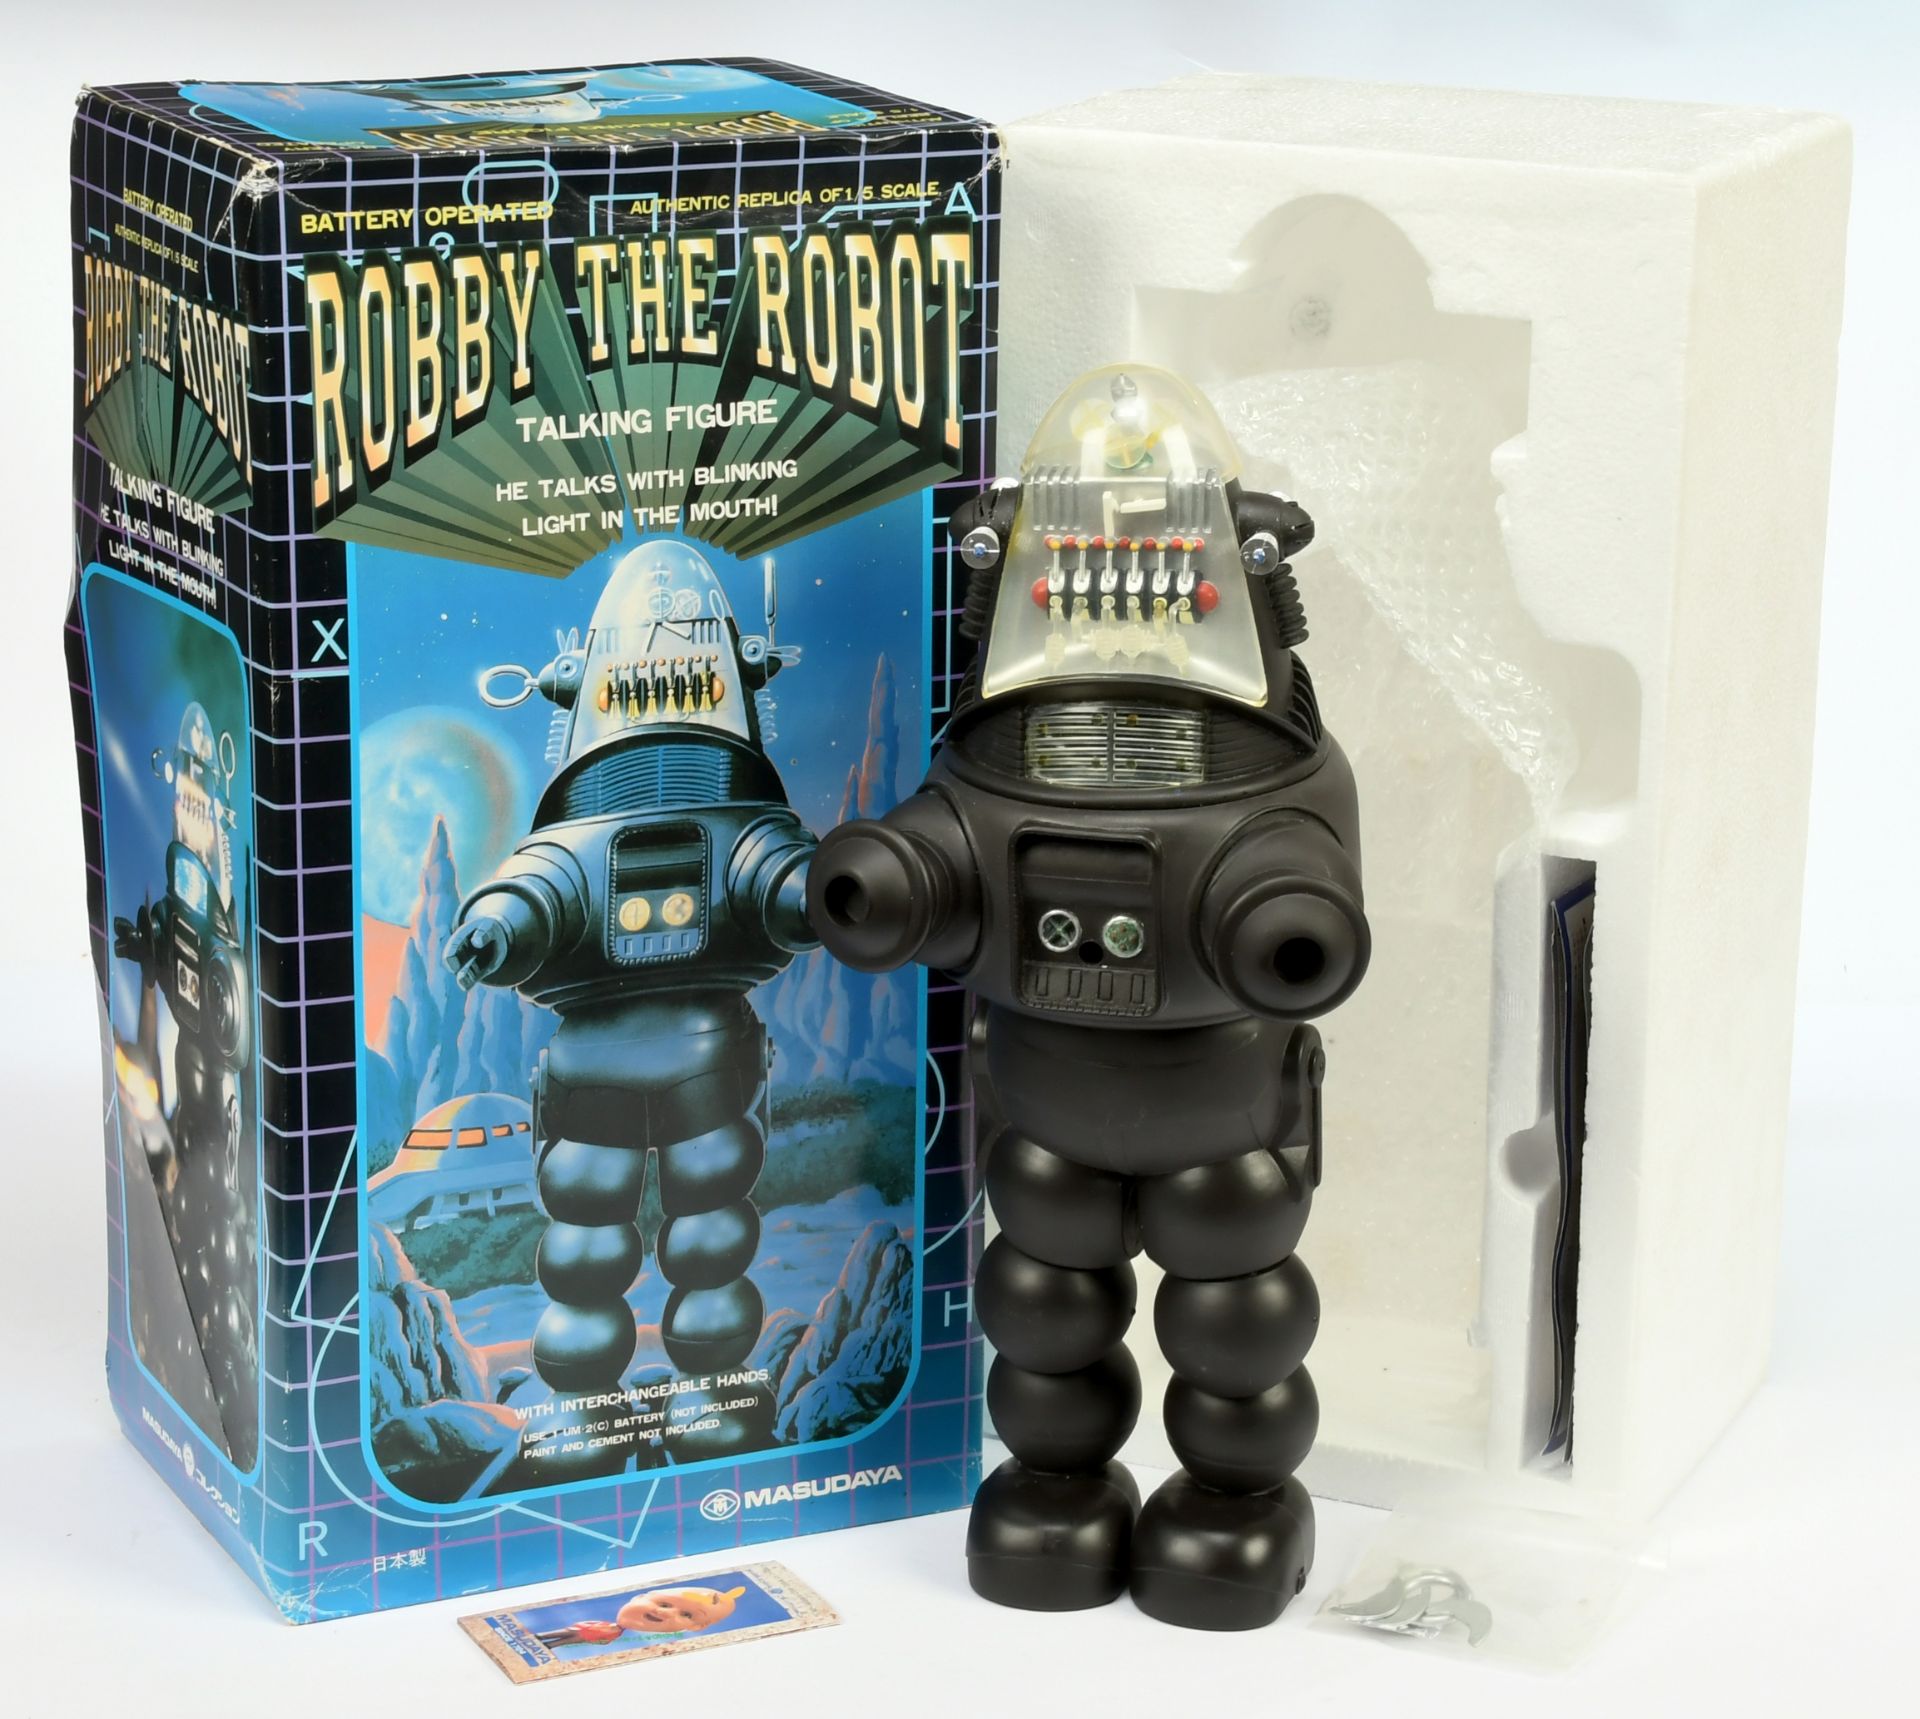 Masudaya Robby the Robot 1:5 scale talking figure